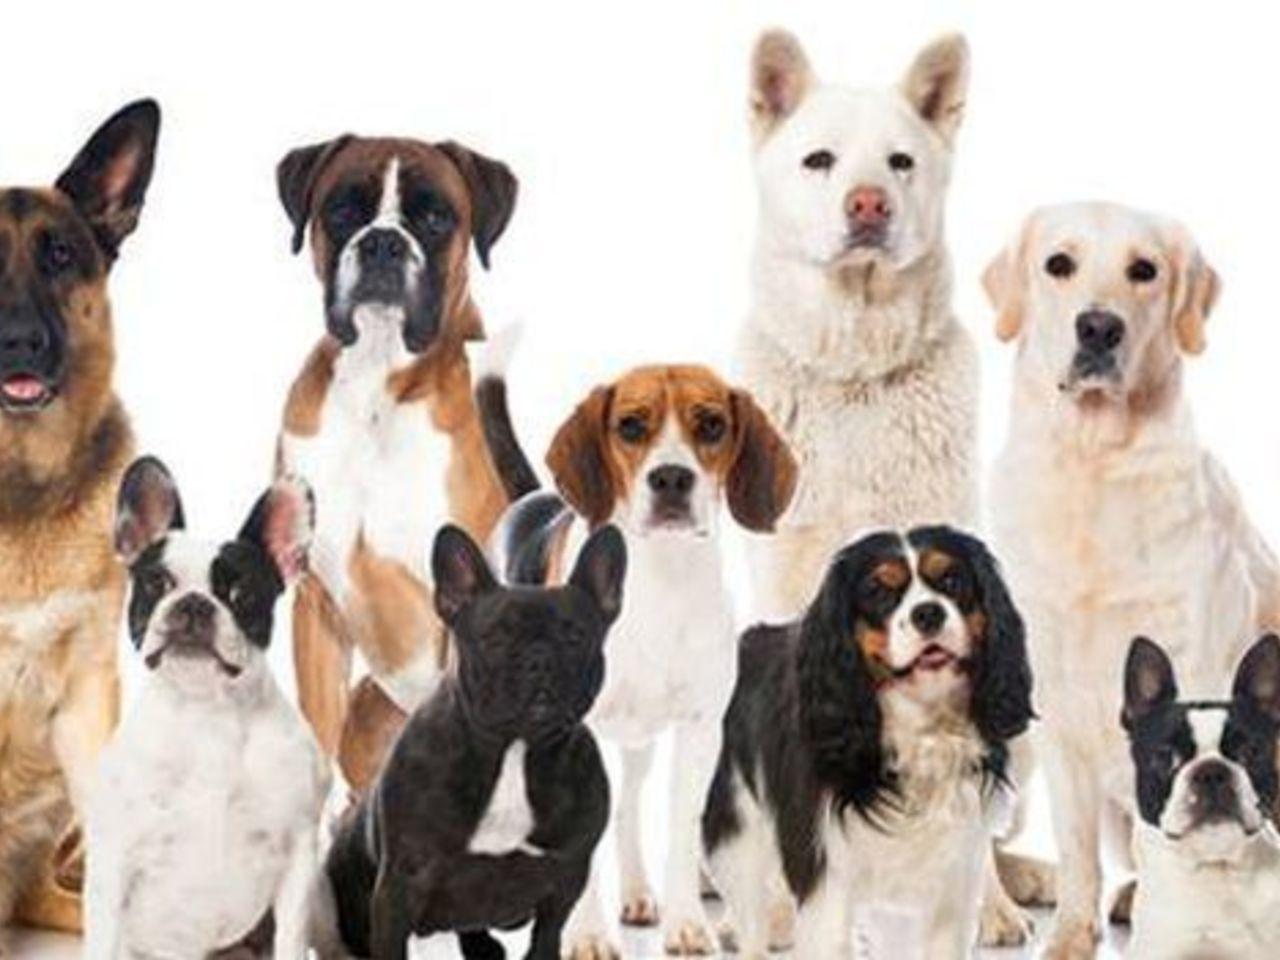 Dog Breed Classification using Transfer Learning in TensorFlow